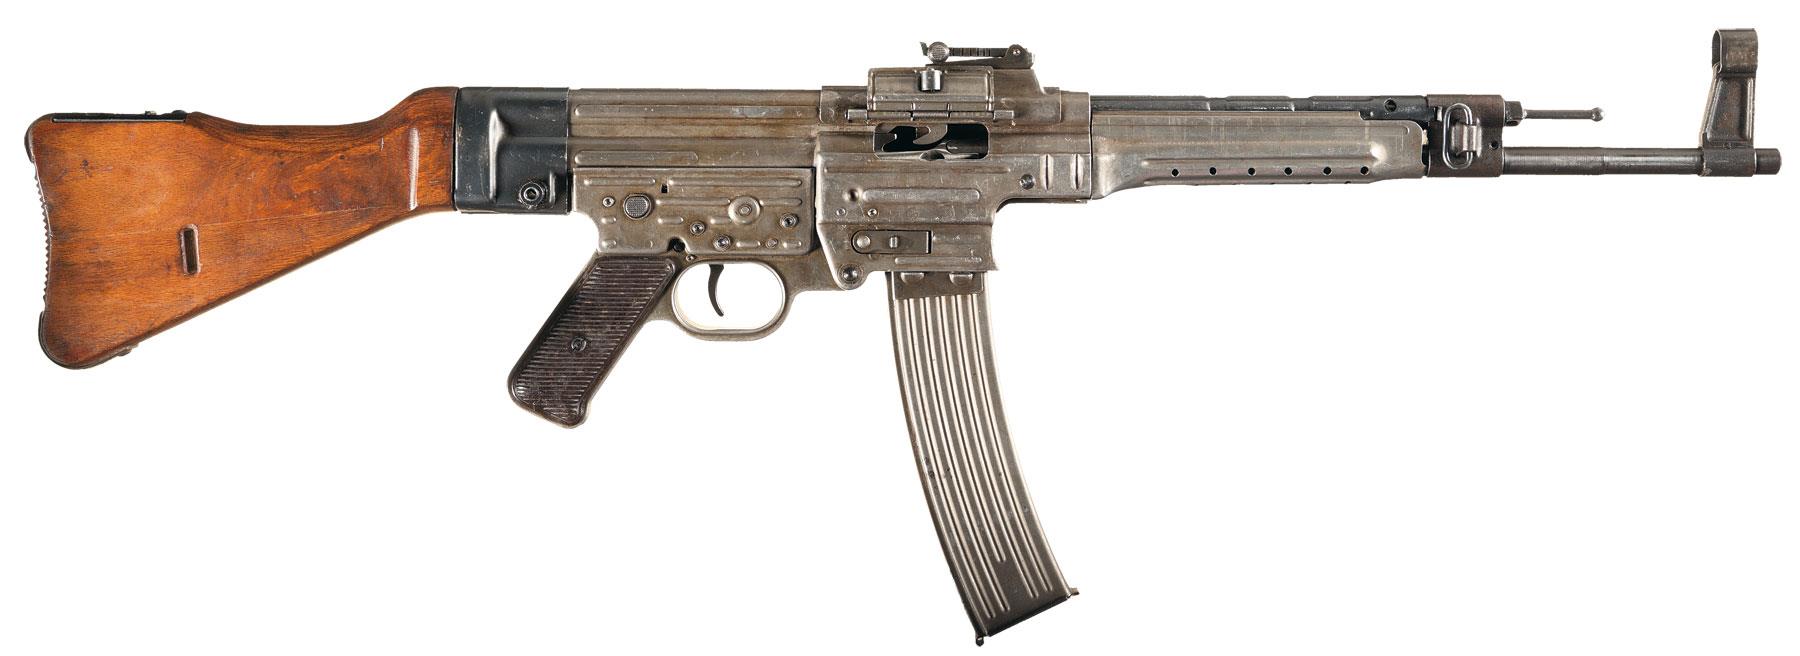 german ww2 machine guns for sale